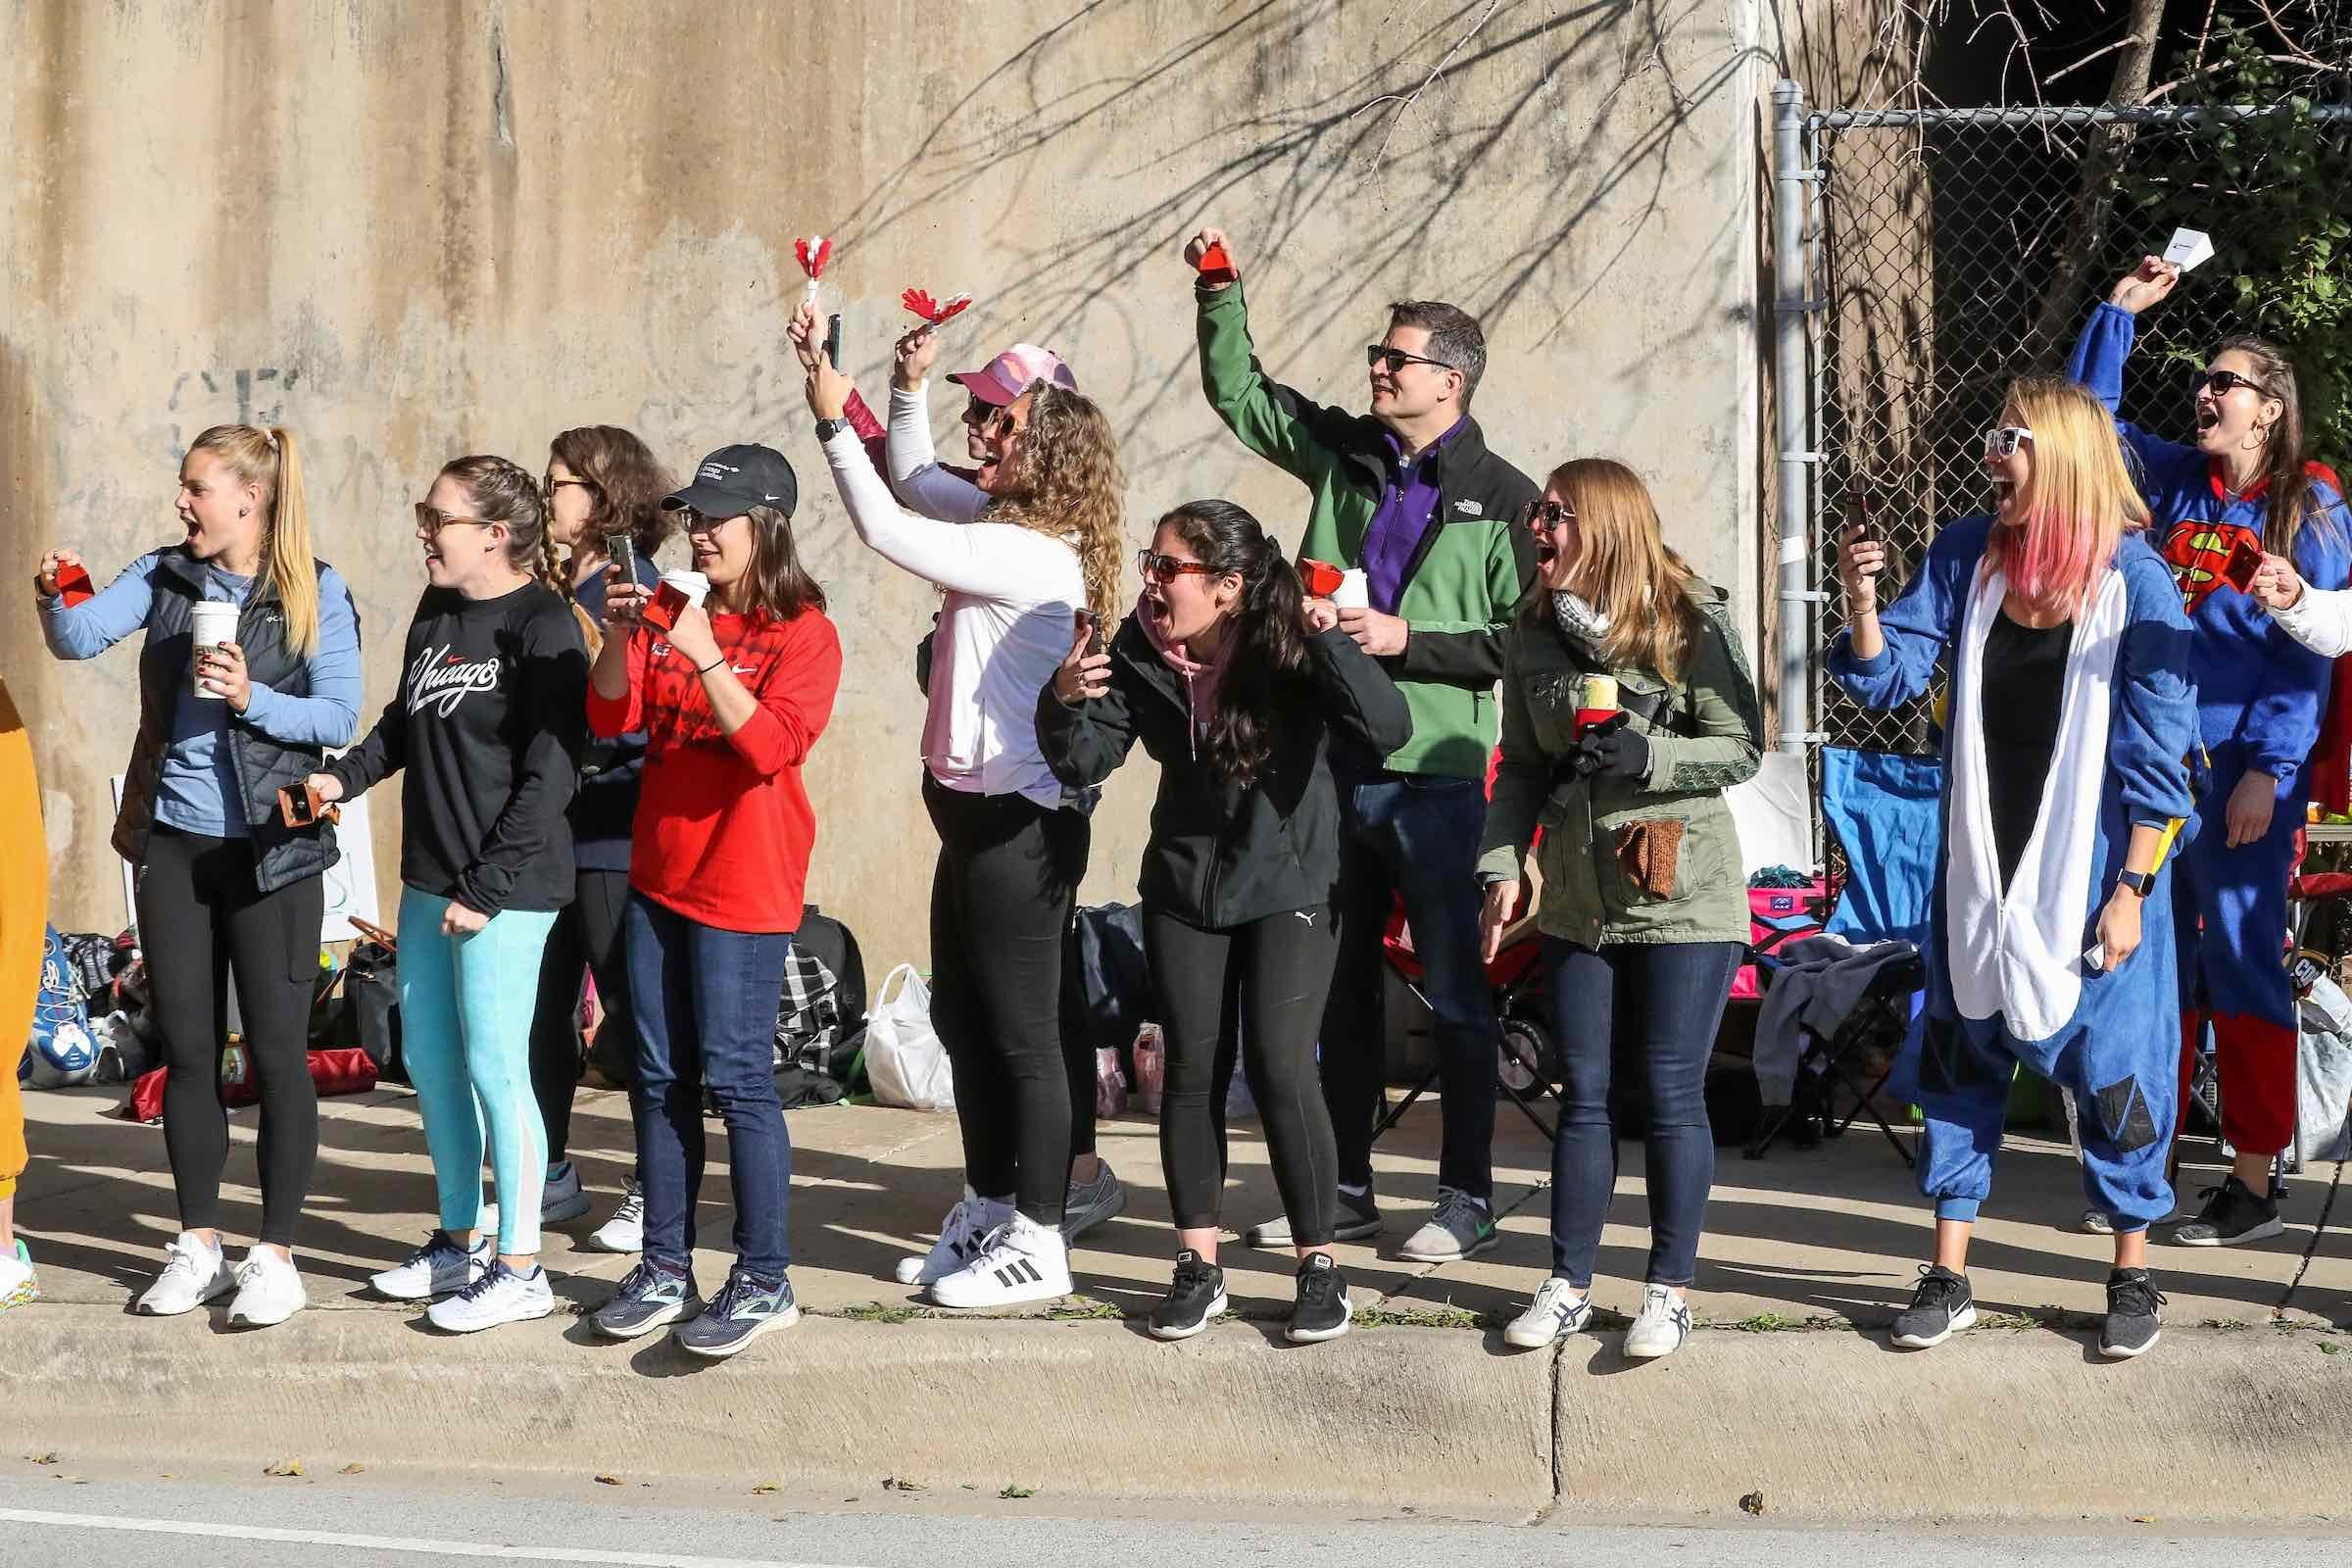 Spectators cheering on runners in 2022. (Kevin Morris / 2022 Bank of America Chicago Marathon)